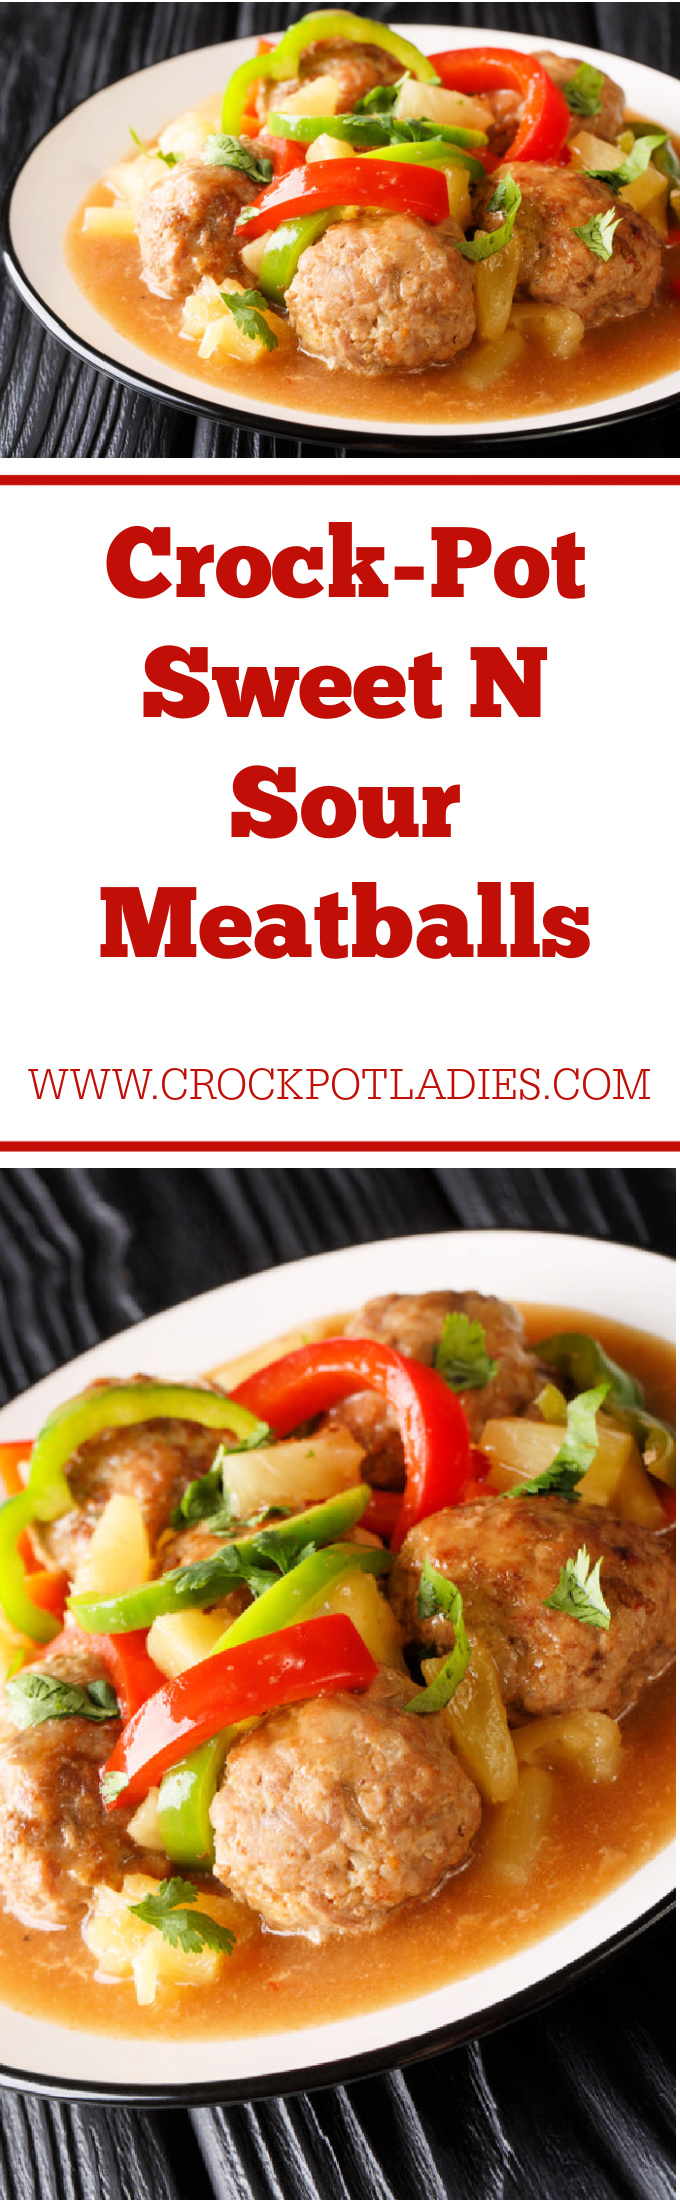 Crock-Pot Sweet N Sour Meatballs